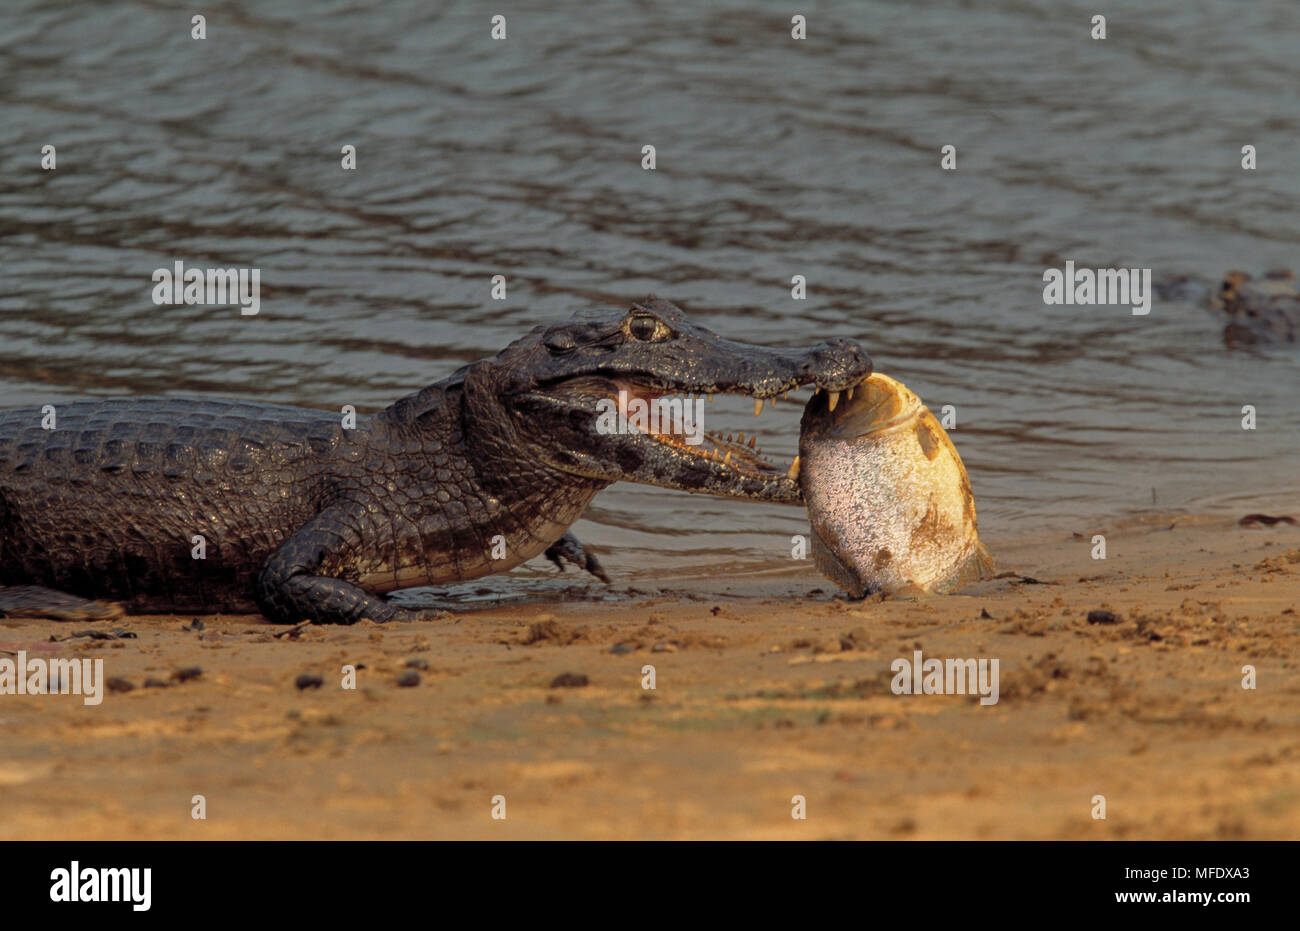 SPECTACLED CAIMAN     Caiman crocodilus on bank with Piranha prey  Pantanal Mato Grosso, Brazil Stock Photo